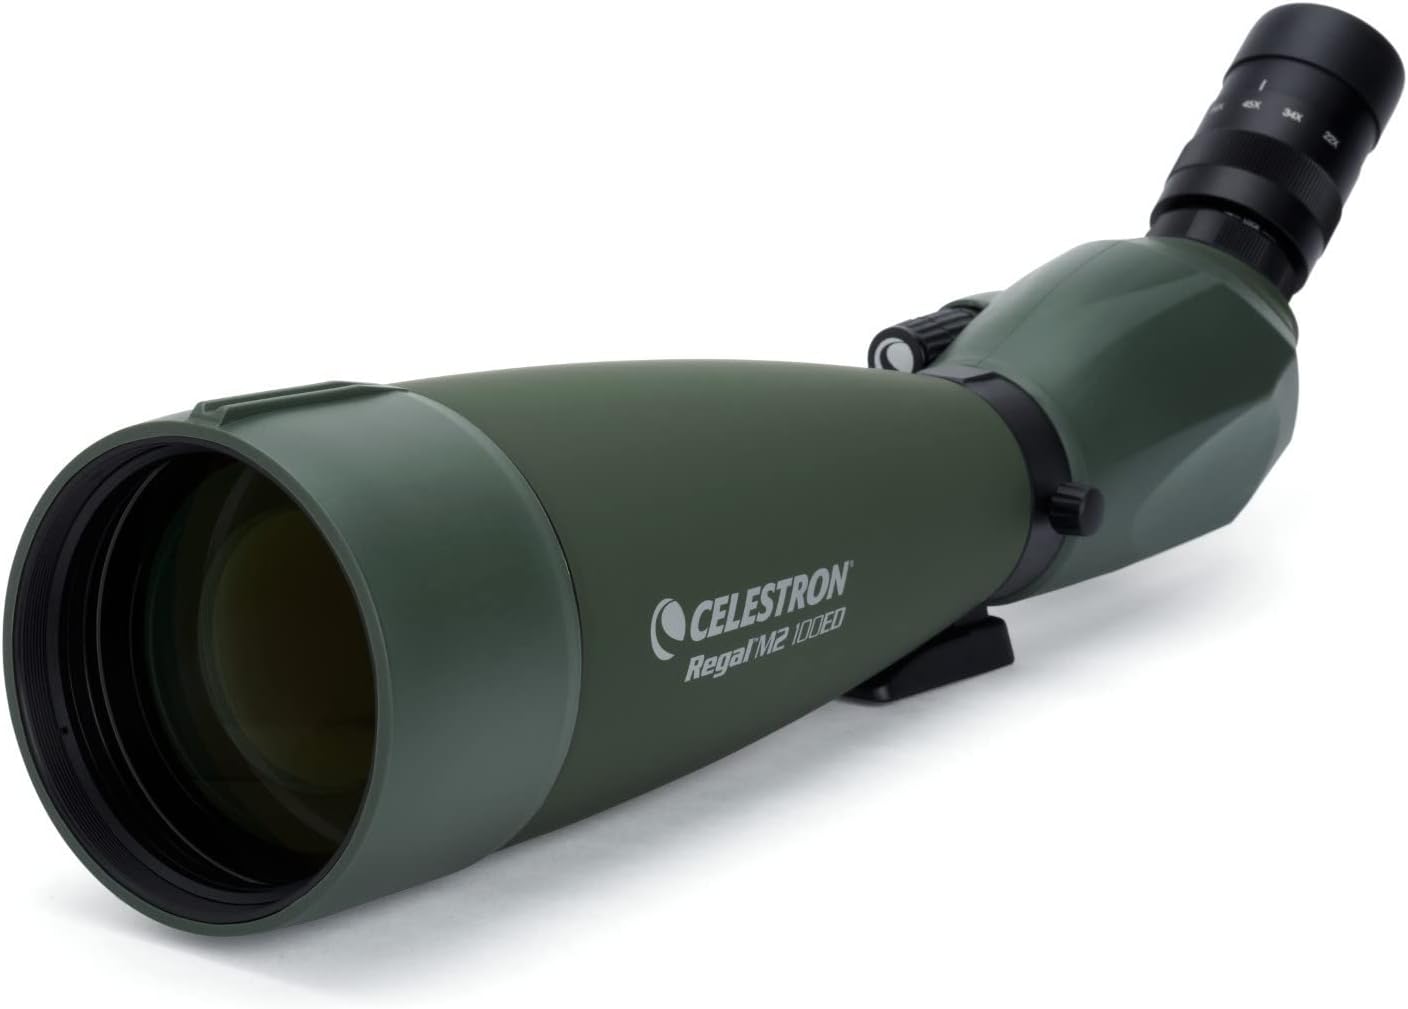 Celestron Regal M2 100ED Spotting Scope Review